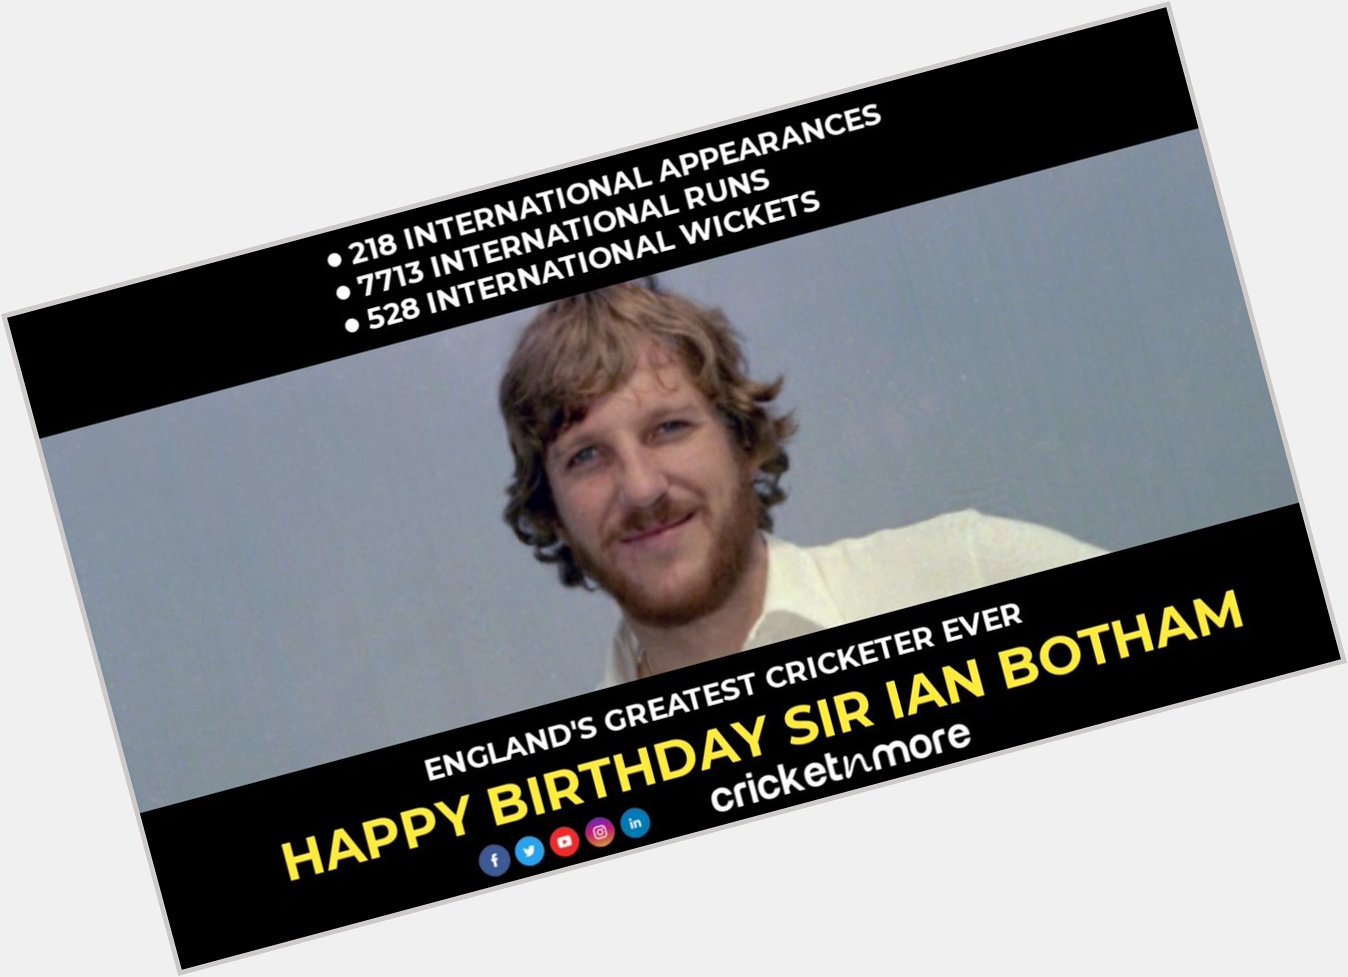 Happy Birthday Sir Ian Botham
.
.    